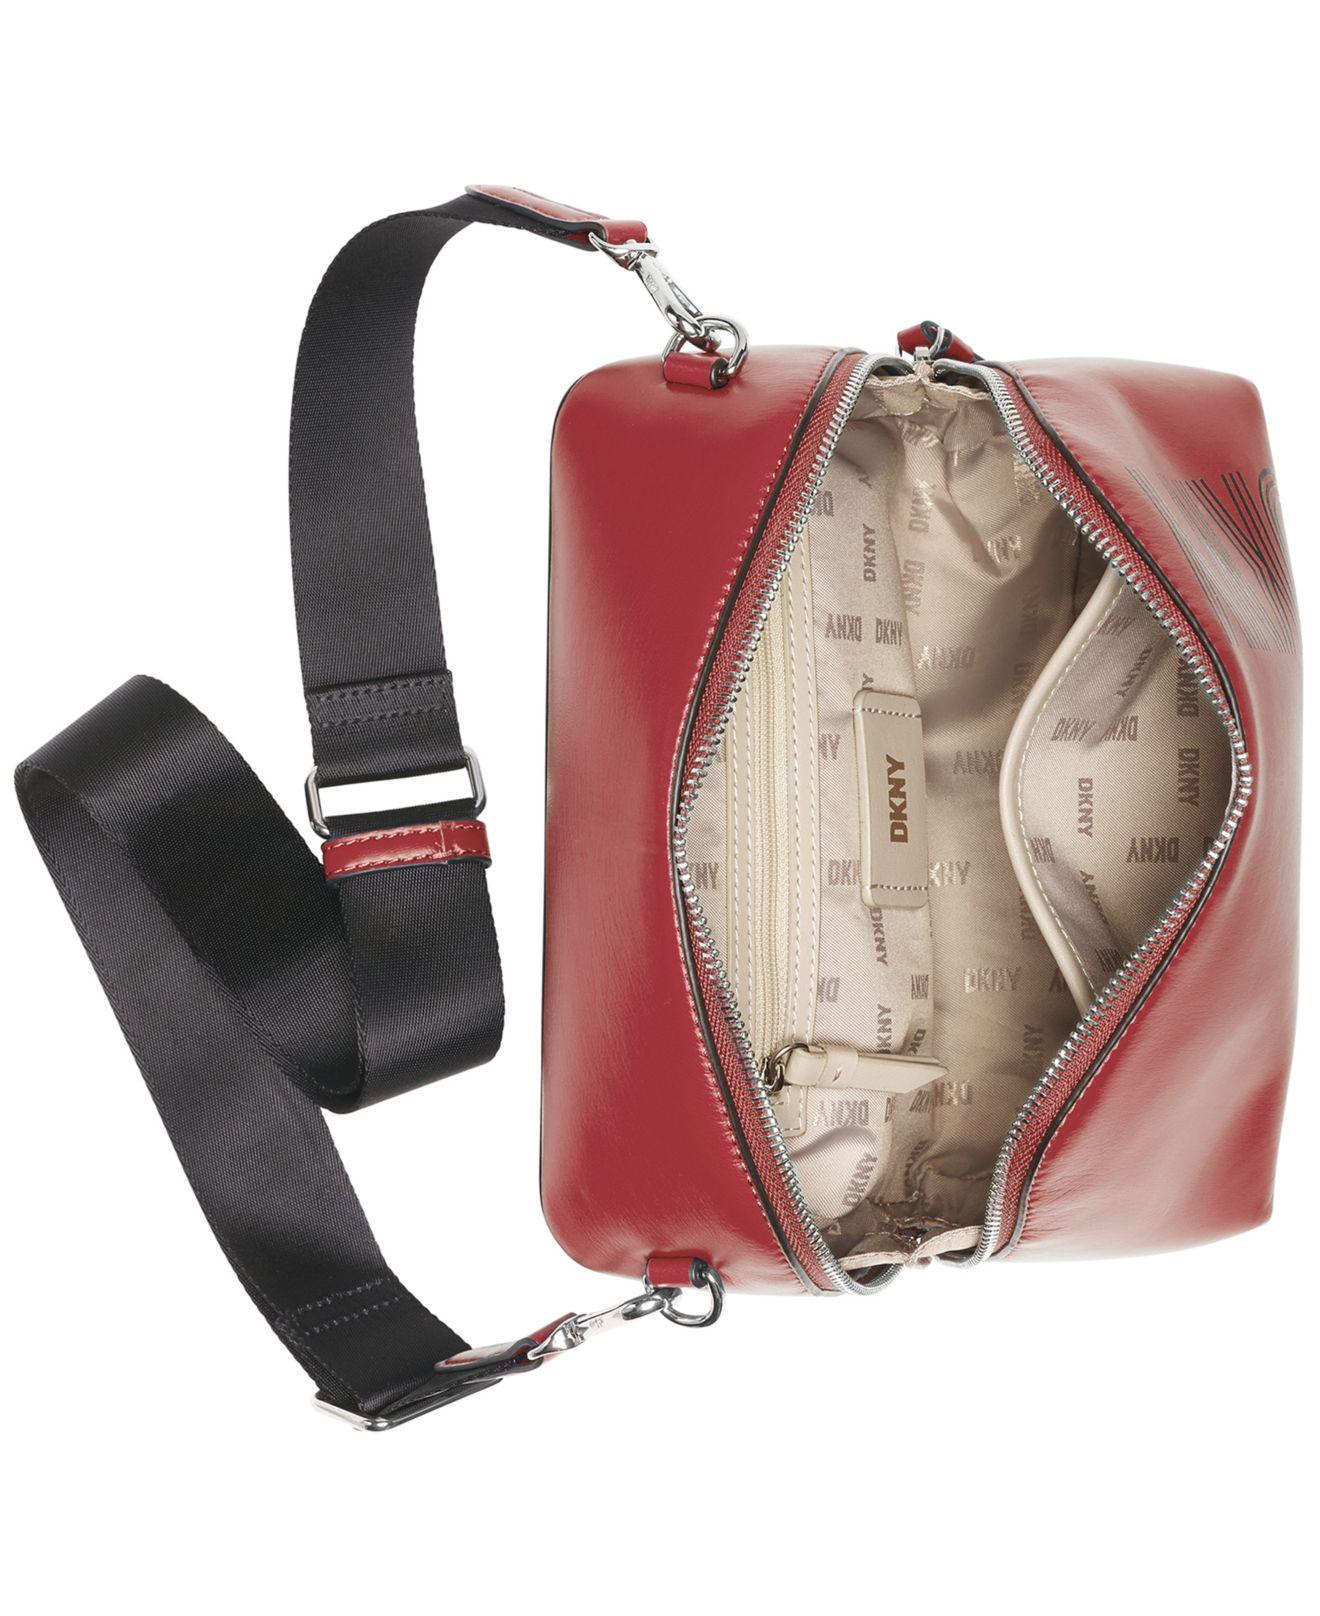 DKNY Top Zip Crossbody Bag Red Leather Handbag Strap Small Purse